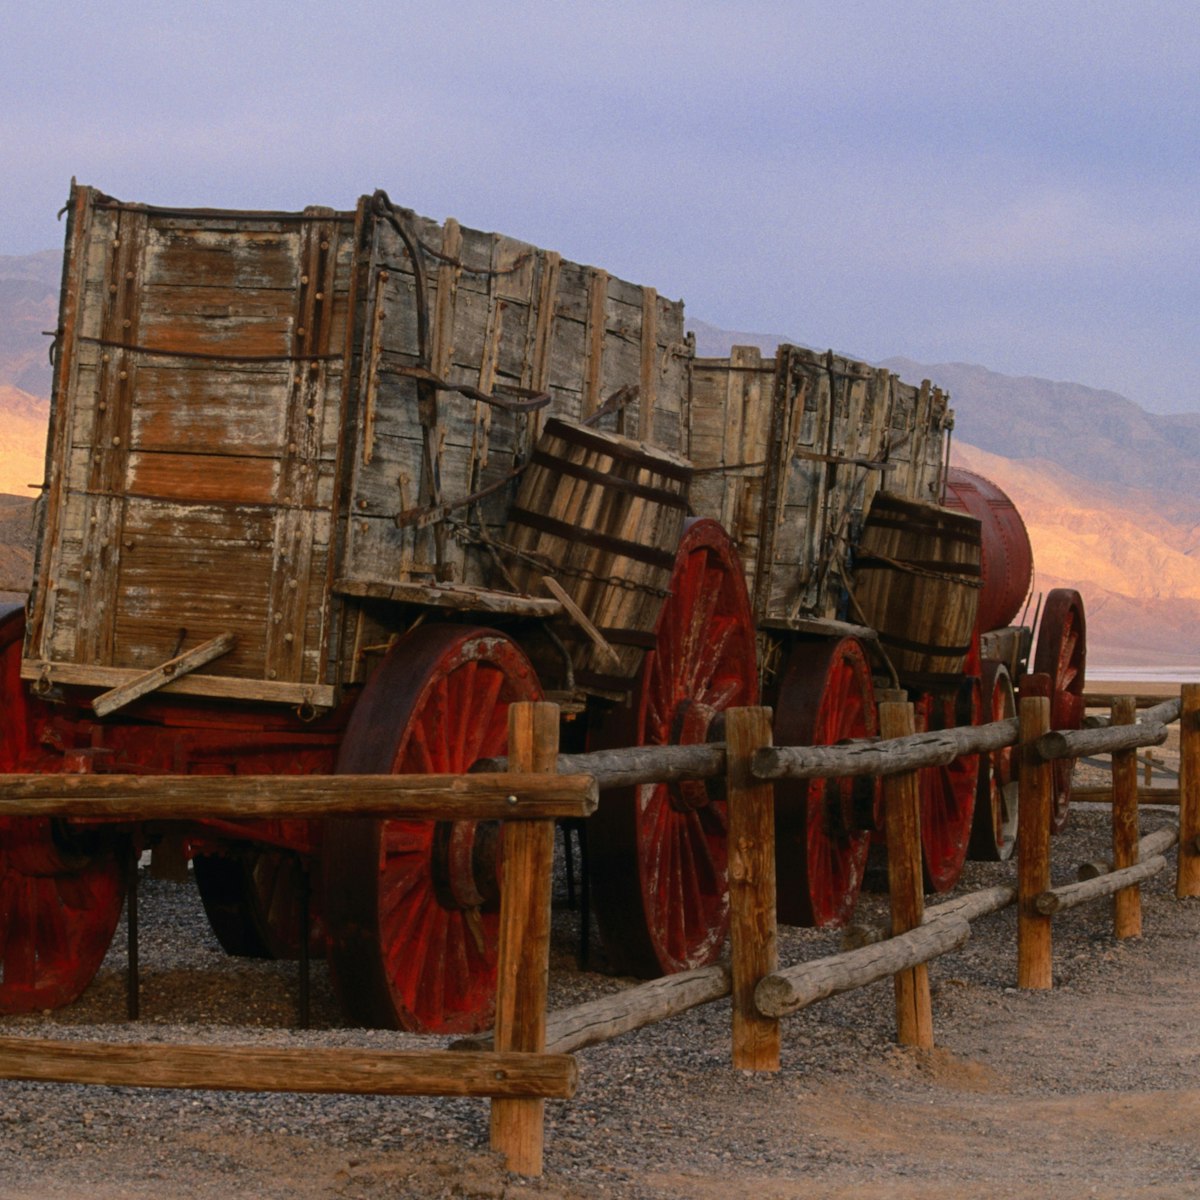 Relics from Harmony Borax mining, Death Valley National Park.